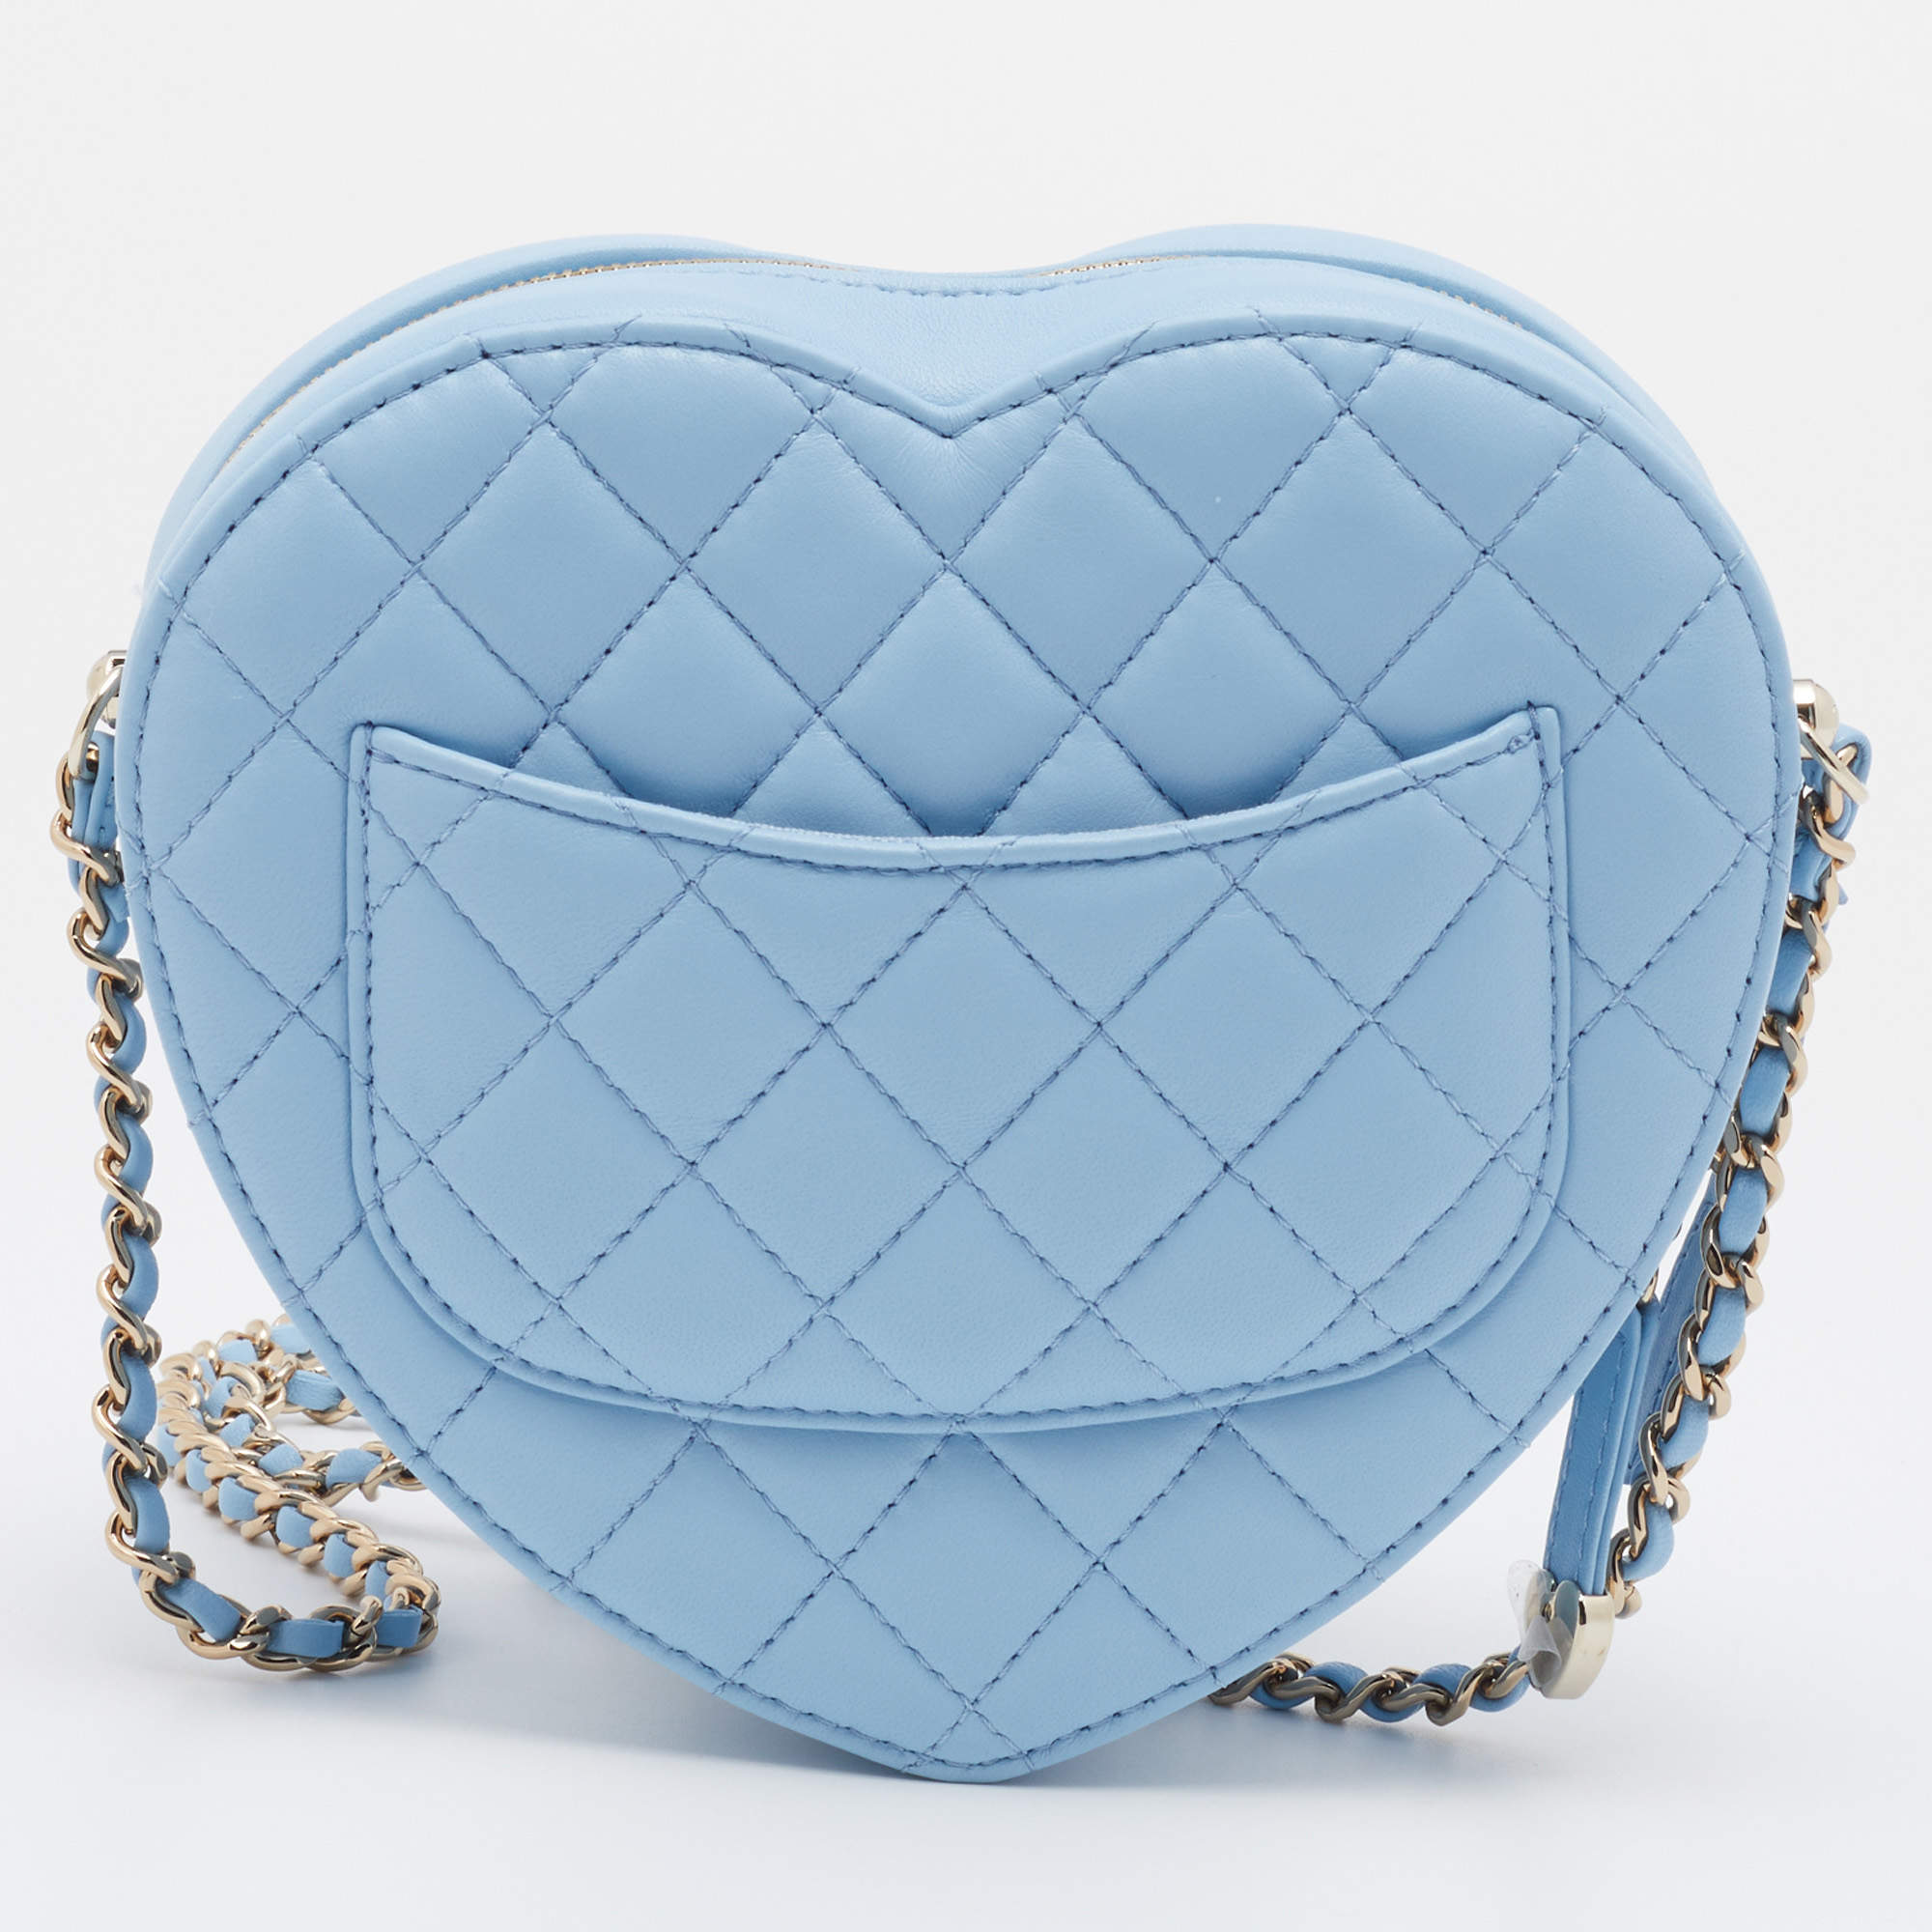 Chanel Blue Leather Heart Classic Shoulder Bag